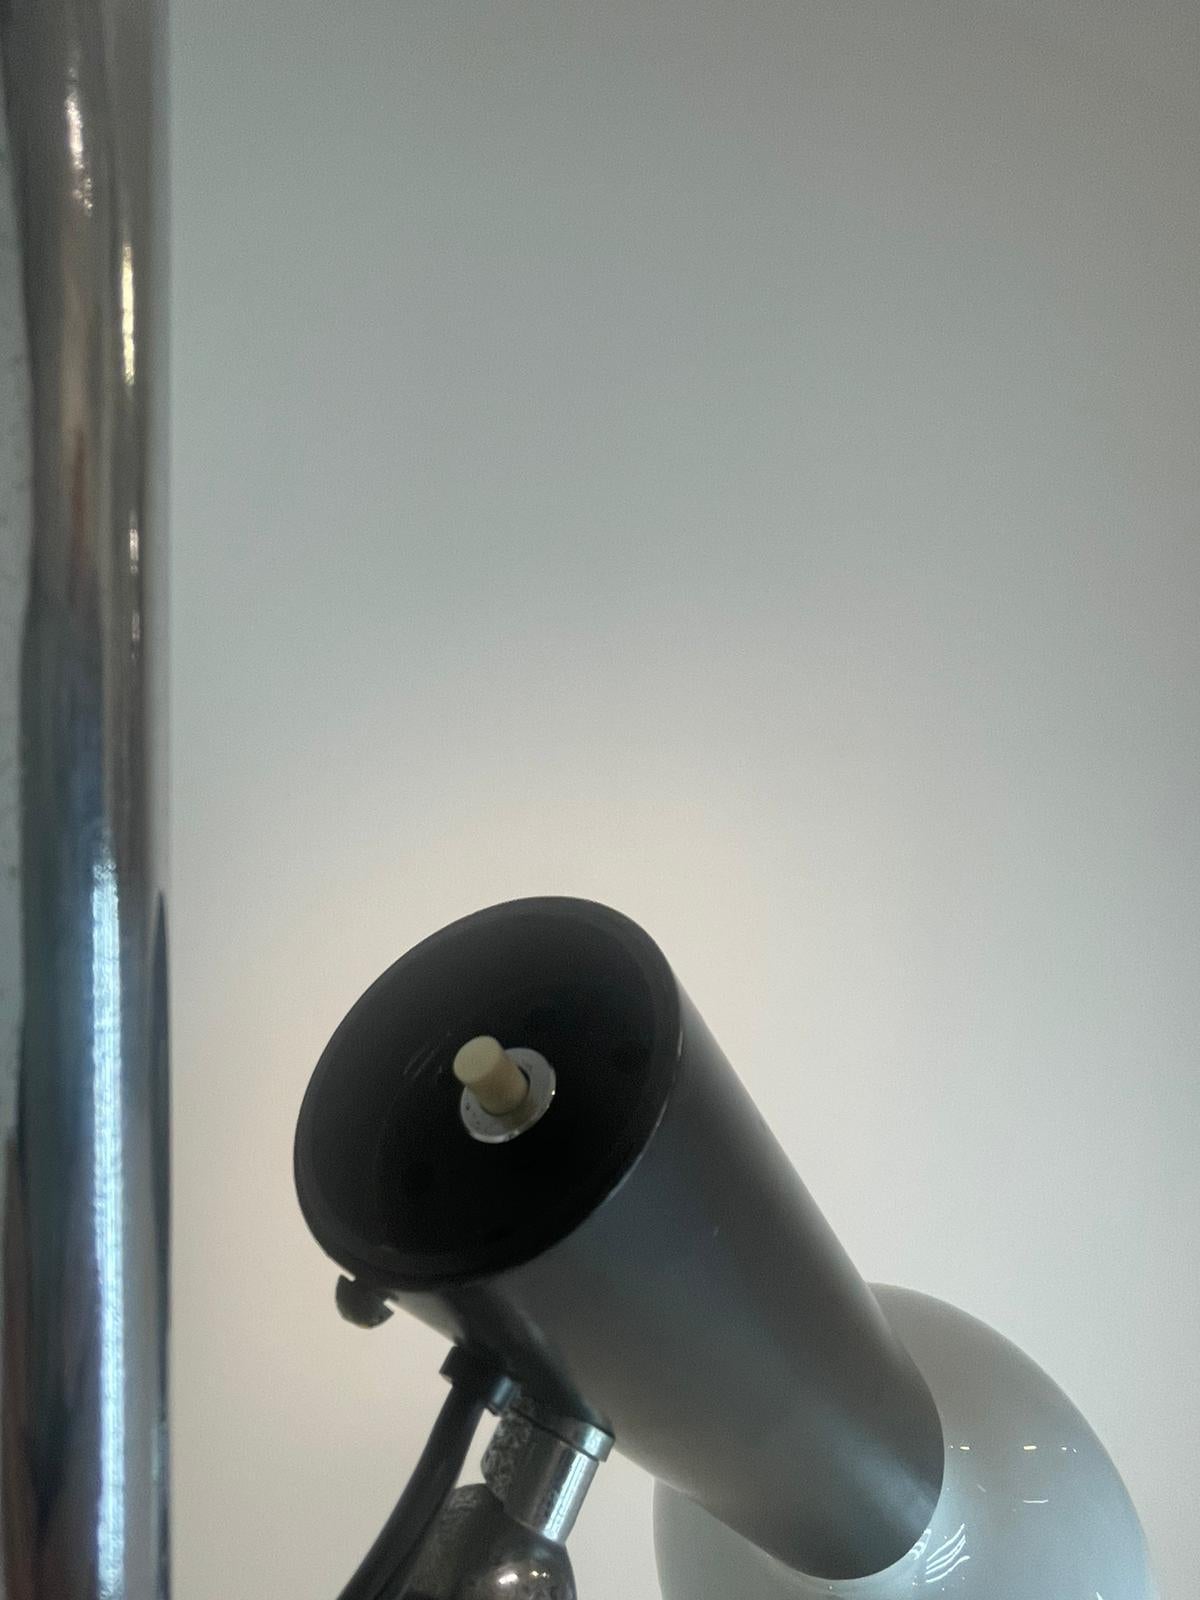 Gino Sarfatti Arteluce Mod 1055 Floor Lamp Black Iron Chrome Aluminum Italy 1955 For Sale 1